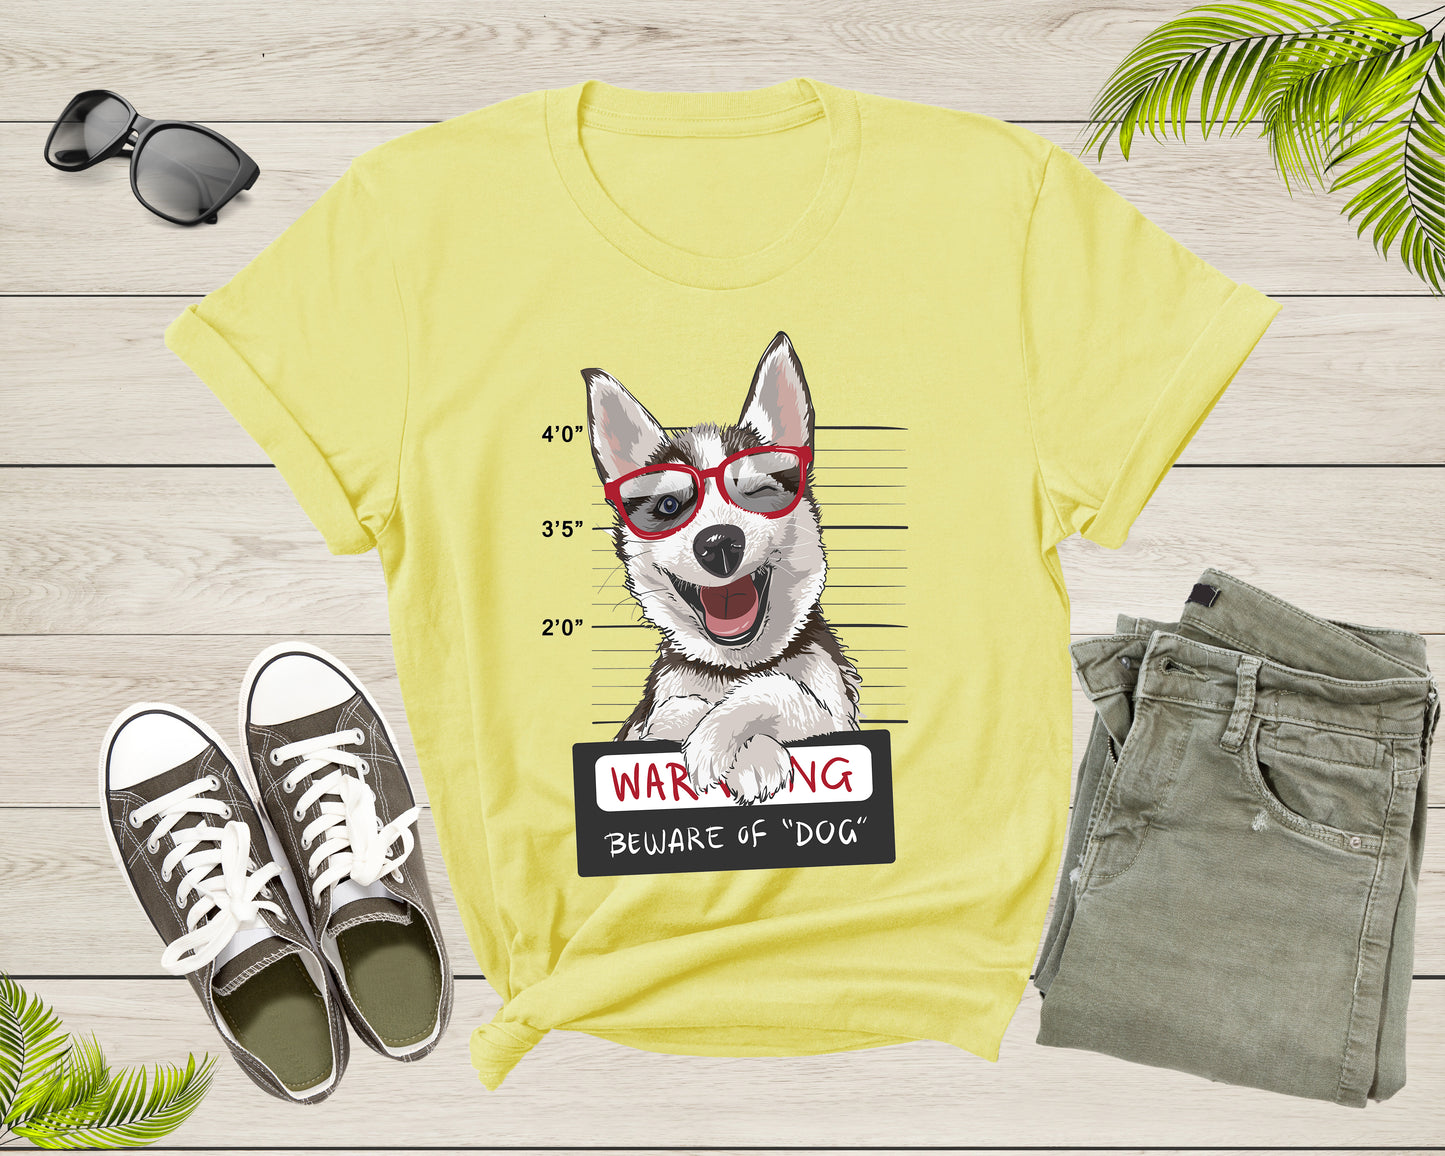 Warning Be Aware of Dog Husky Cute Eskimo Dog Puppy Pet Dog T-Shirt Dog Lover Owner Gift T Shirt for Men Women Boys Girls Teens Tshirt